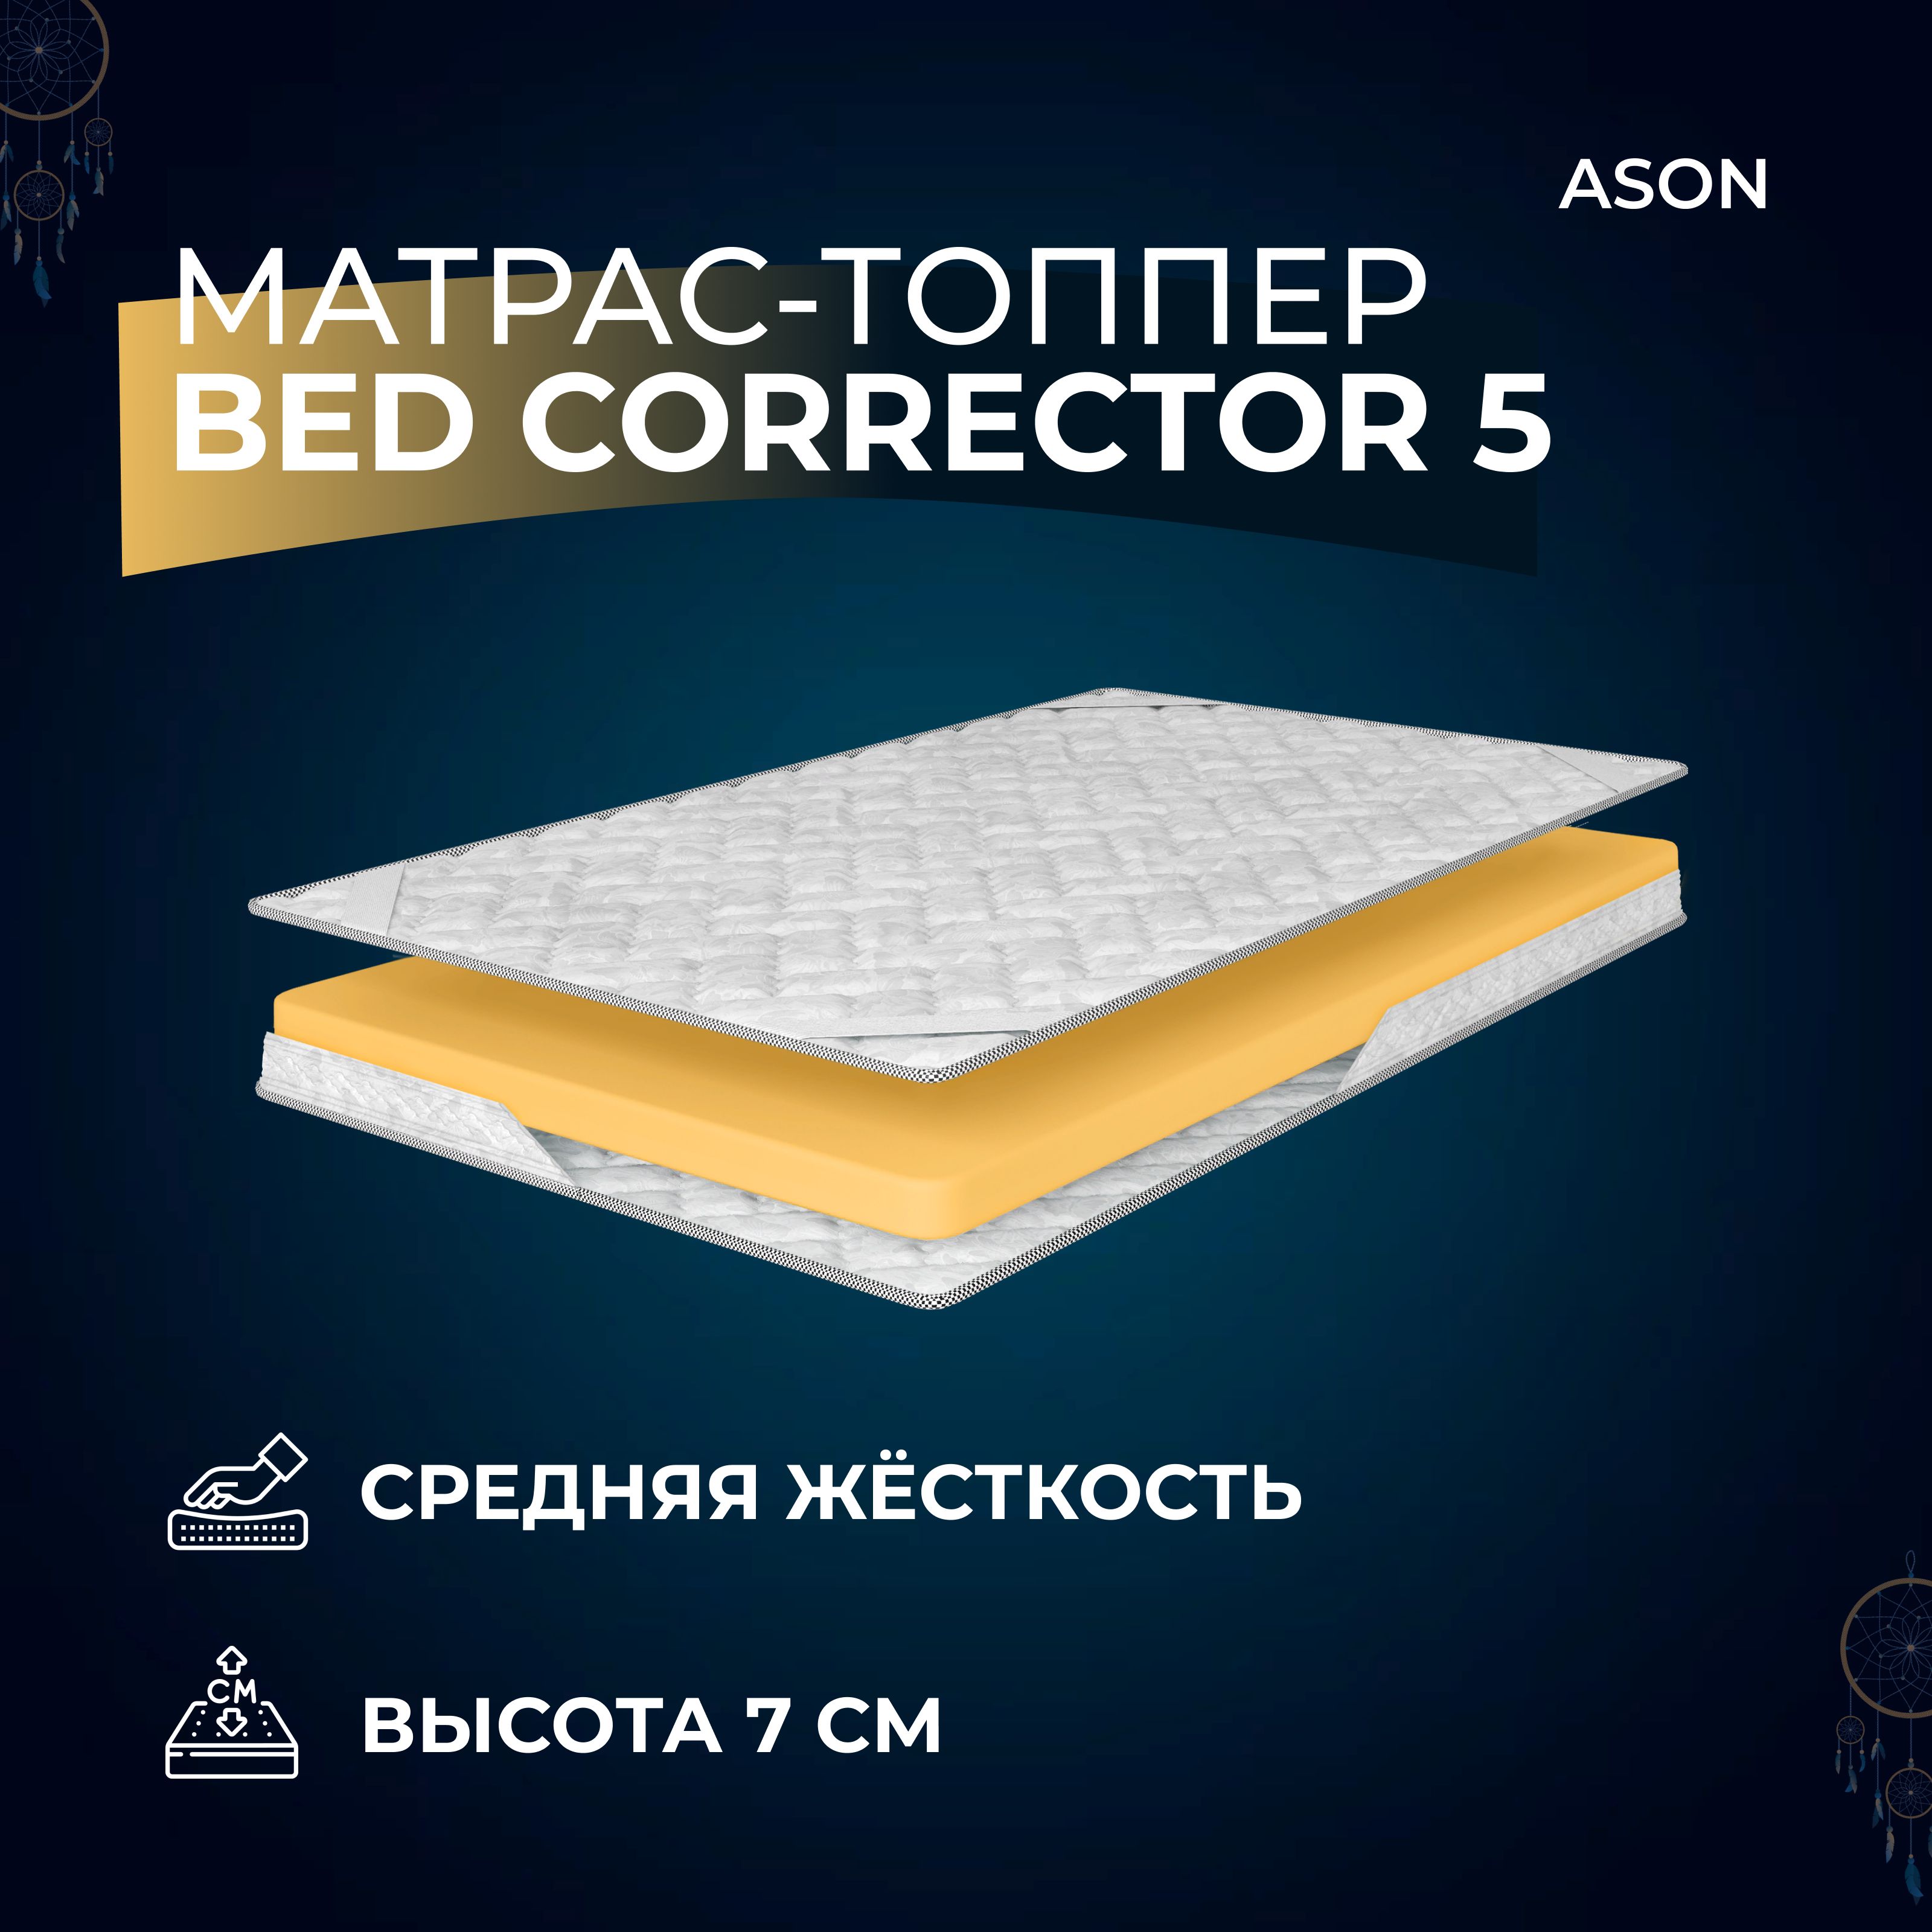 Матрас-топпер 60х200 Ason, Bed corrector 5